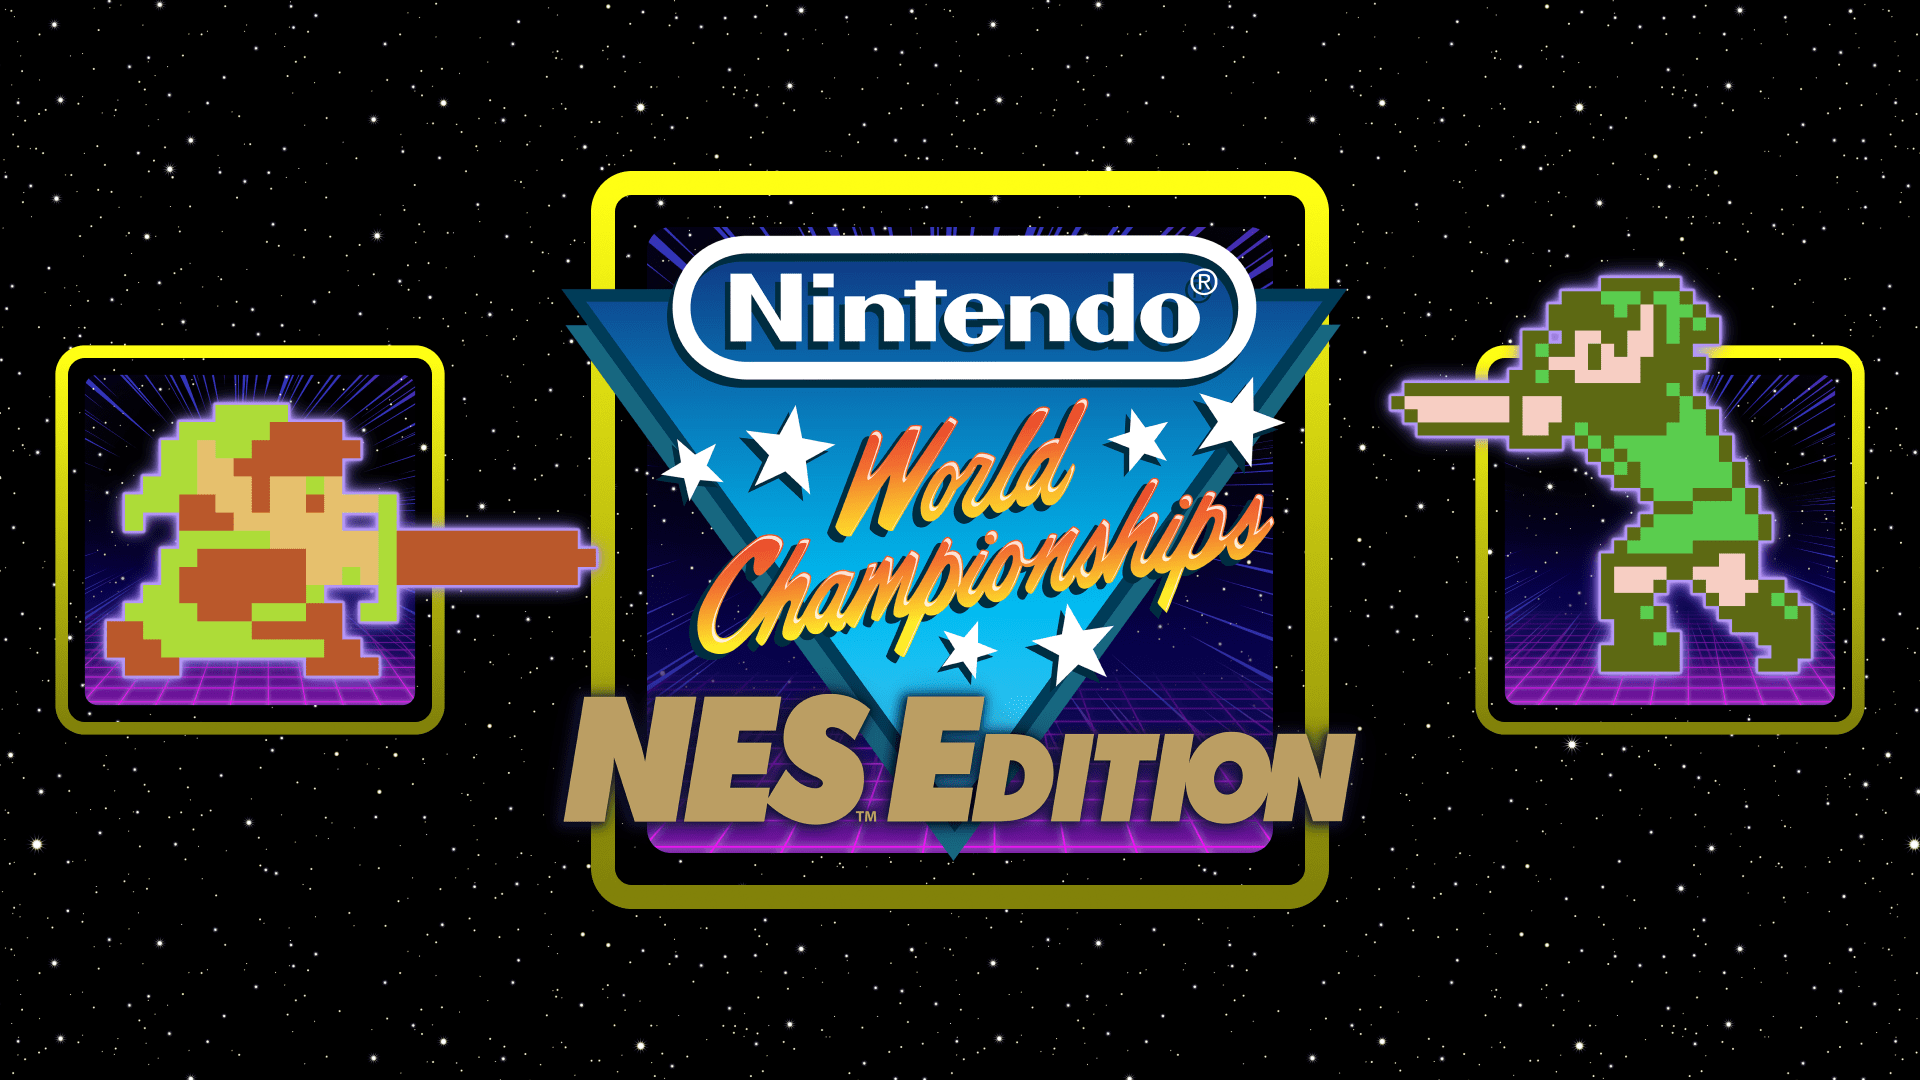 Nintendo World Championships: NES Edition with retro Zelda game art